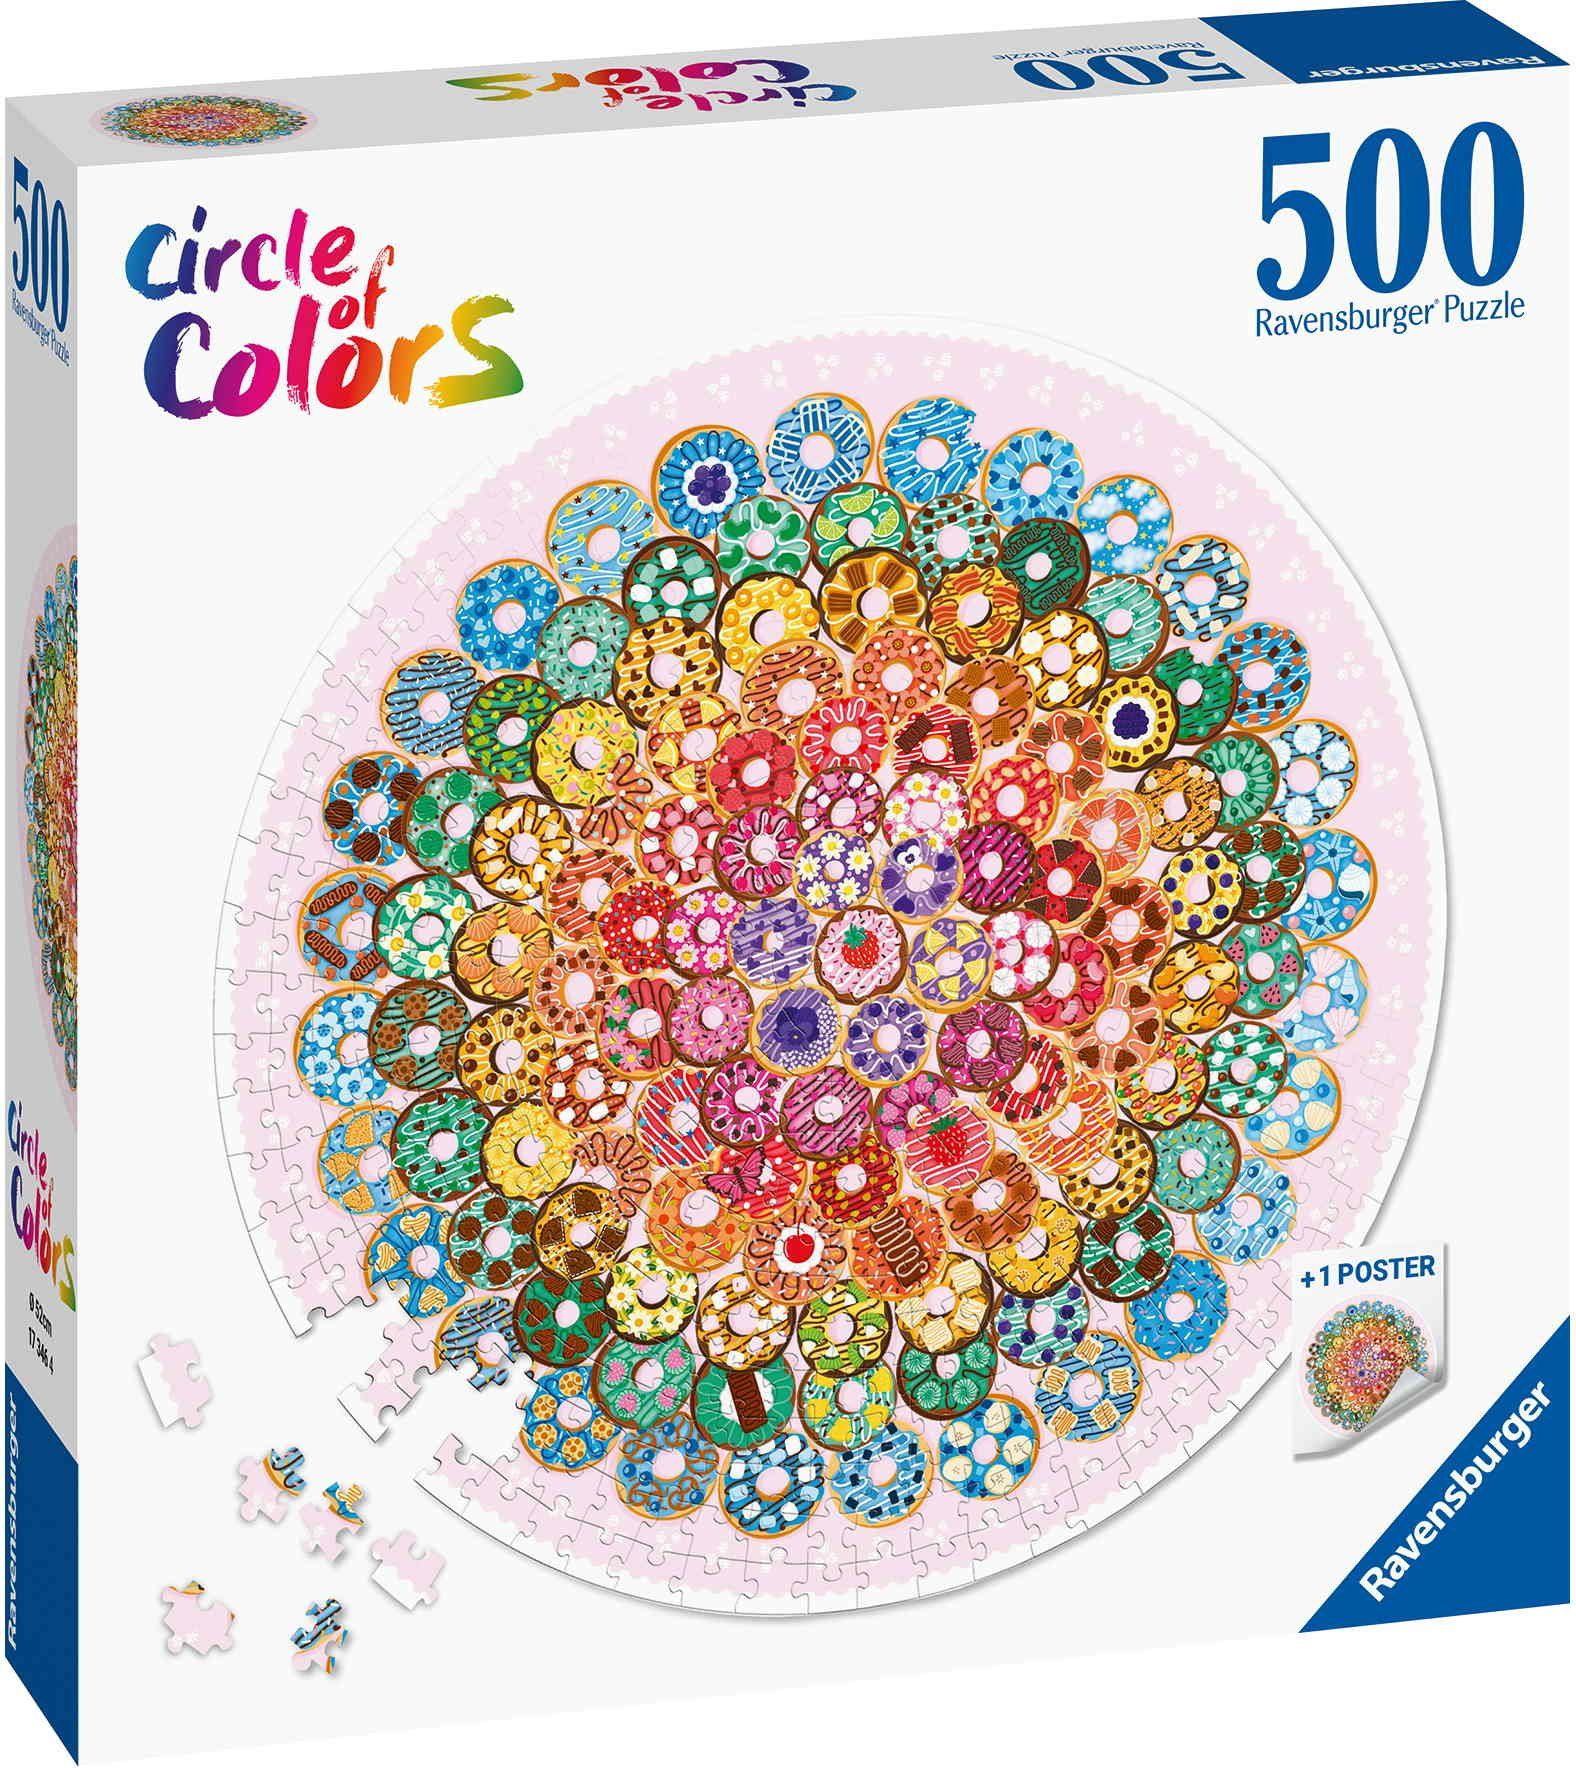 Ravensburger Puzzle 500 Teile Puzzle rund Circle of Colors Donuts 17346,  500 Puzzleteile